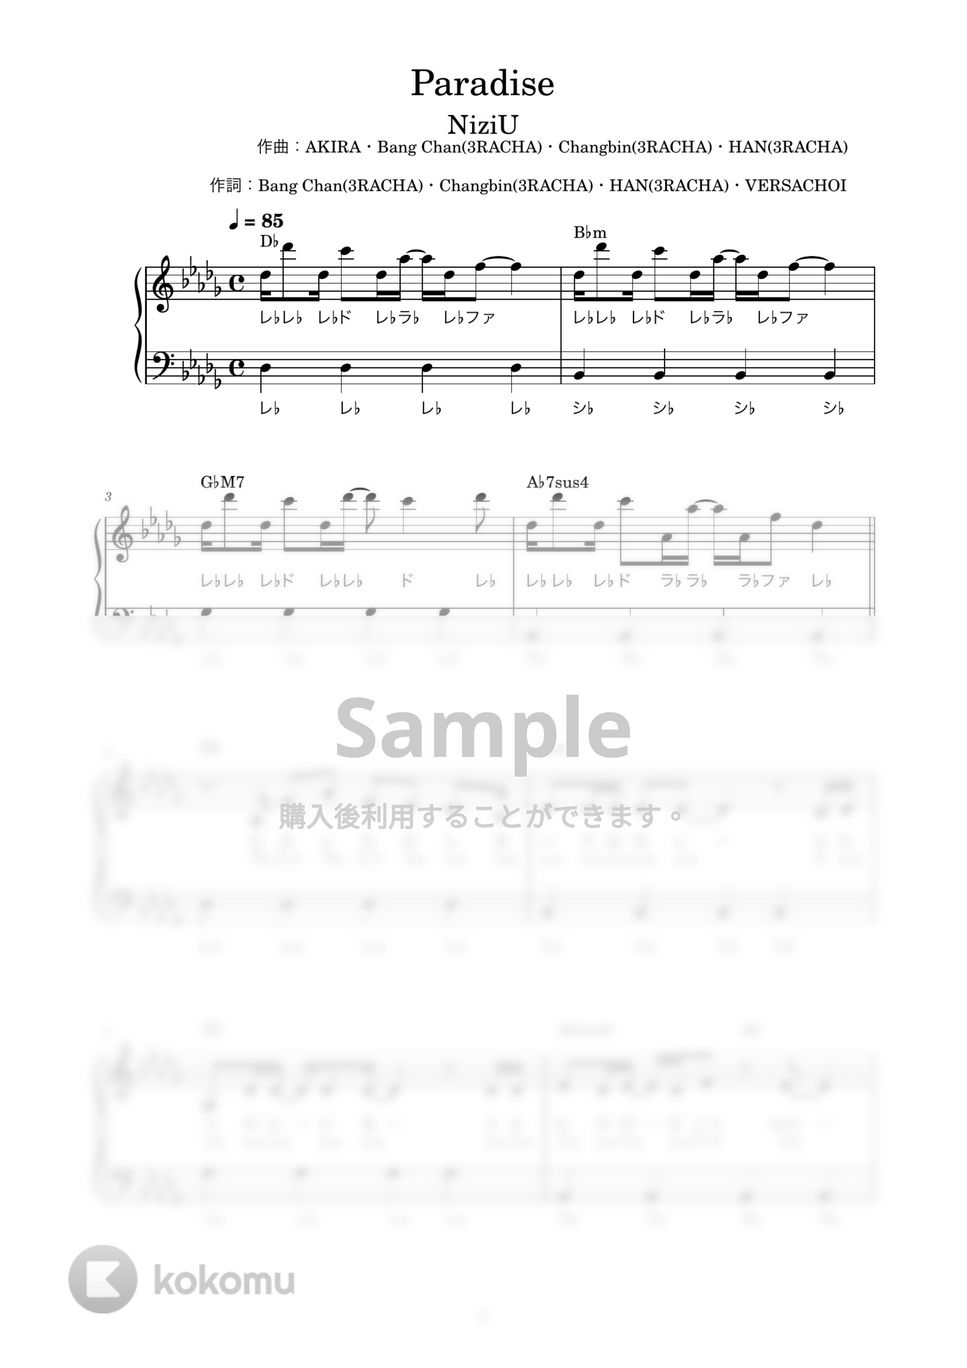 NiziU - Paradise (かんたん / 歌詞付き / ドレミ付き / 初心者) by piano.tokyo